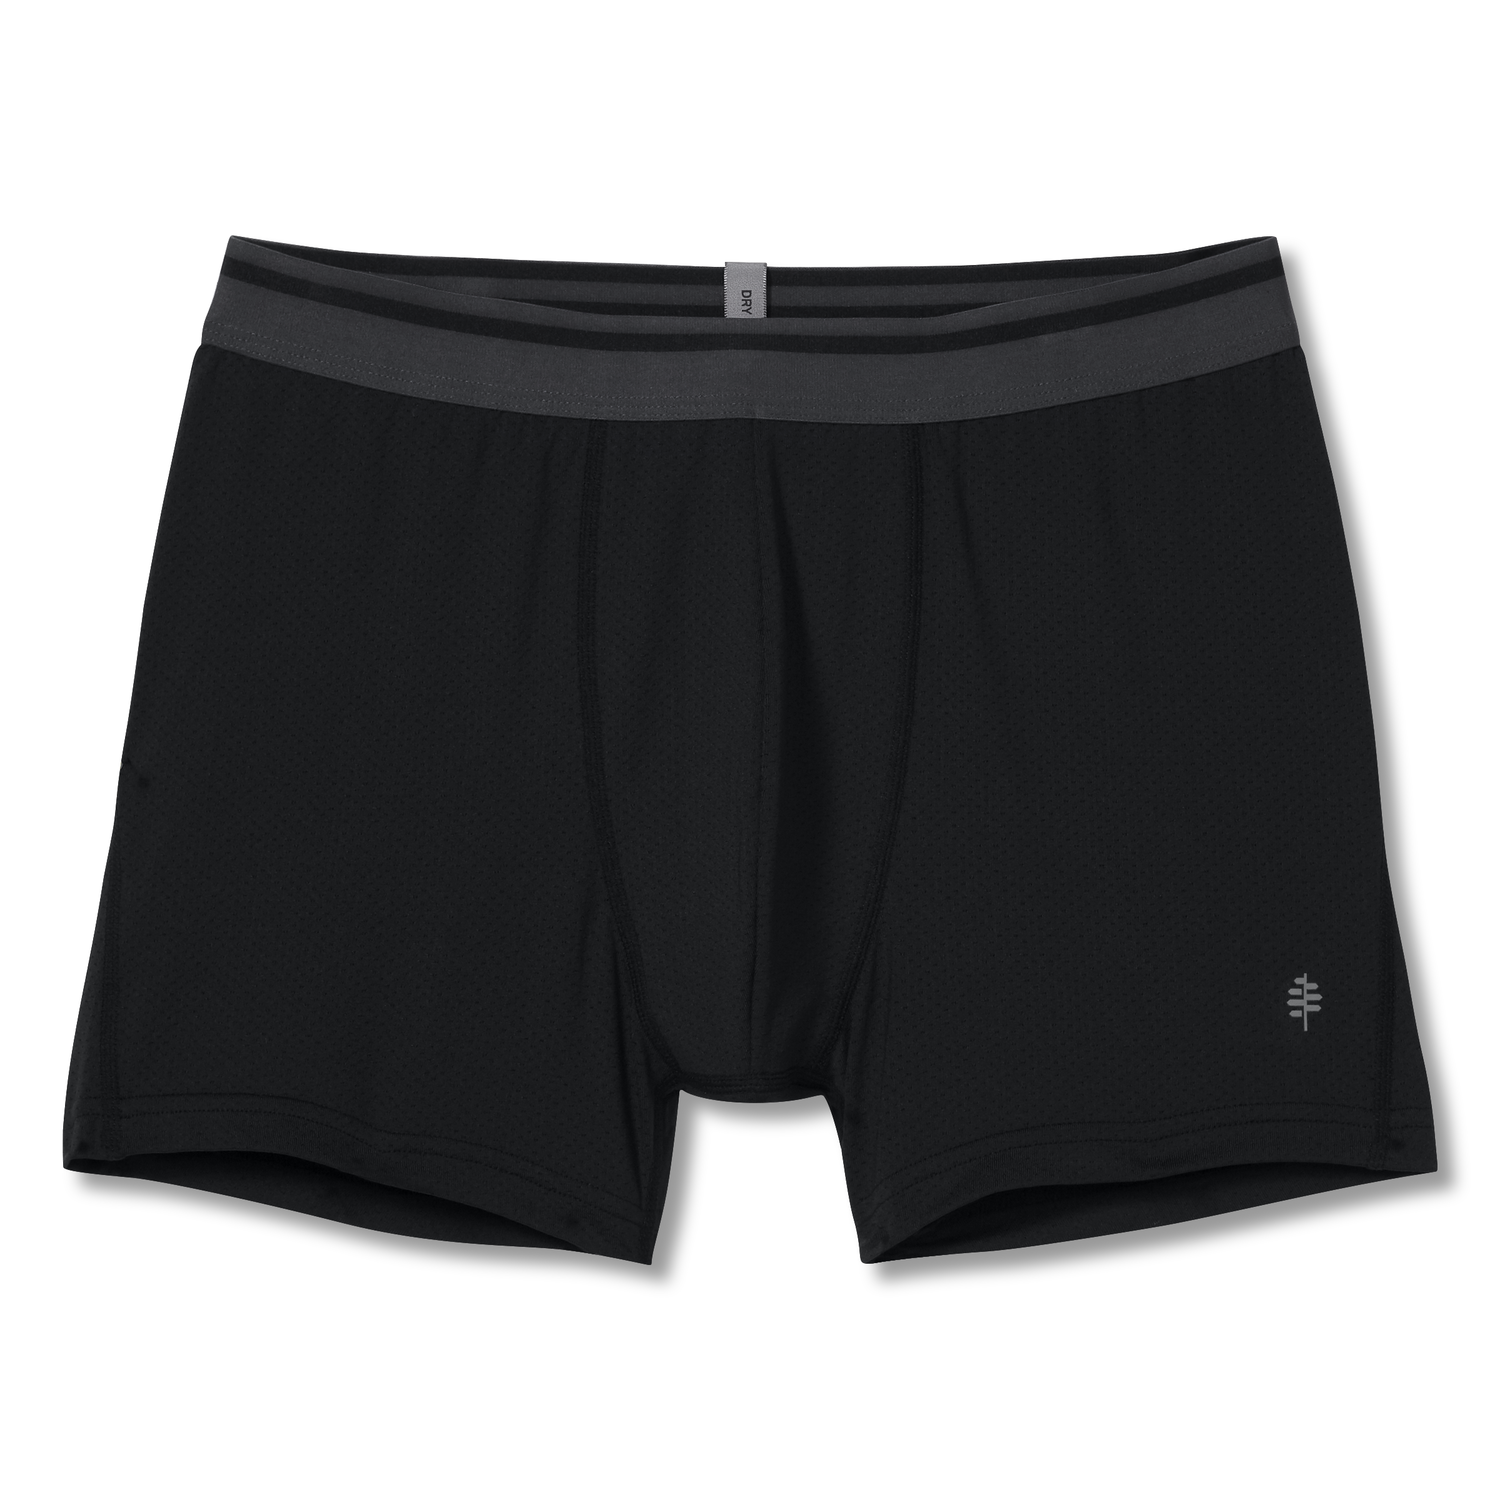 Men's Performance Underwear - Outdoors Oriented